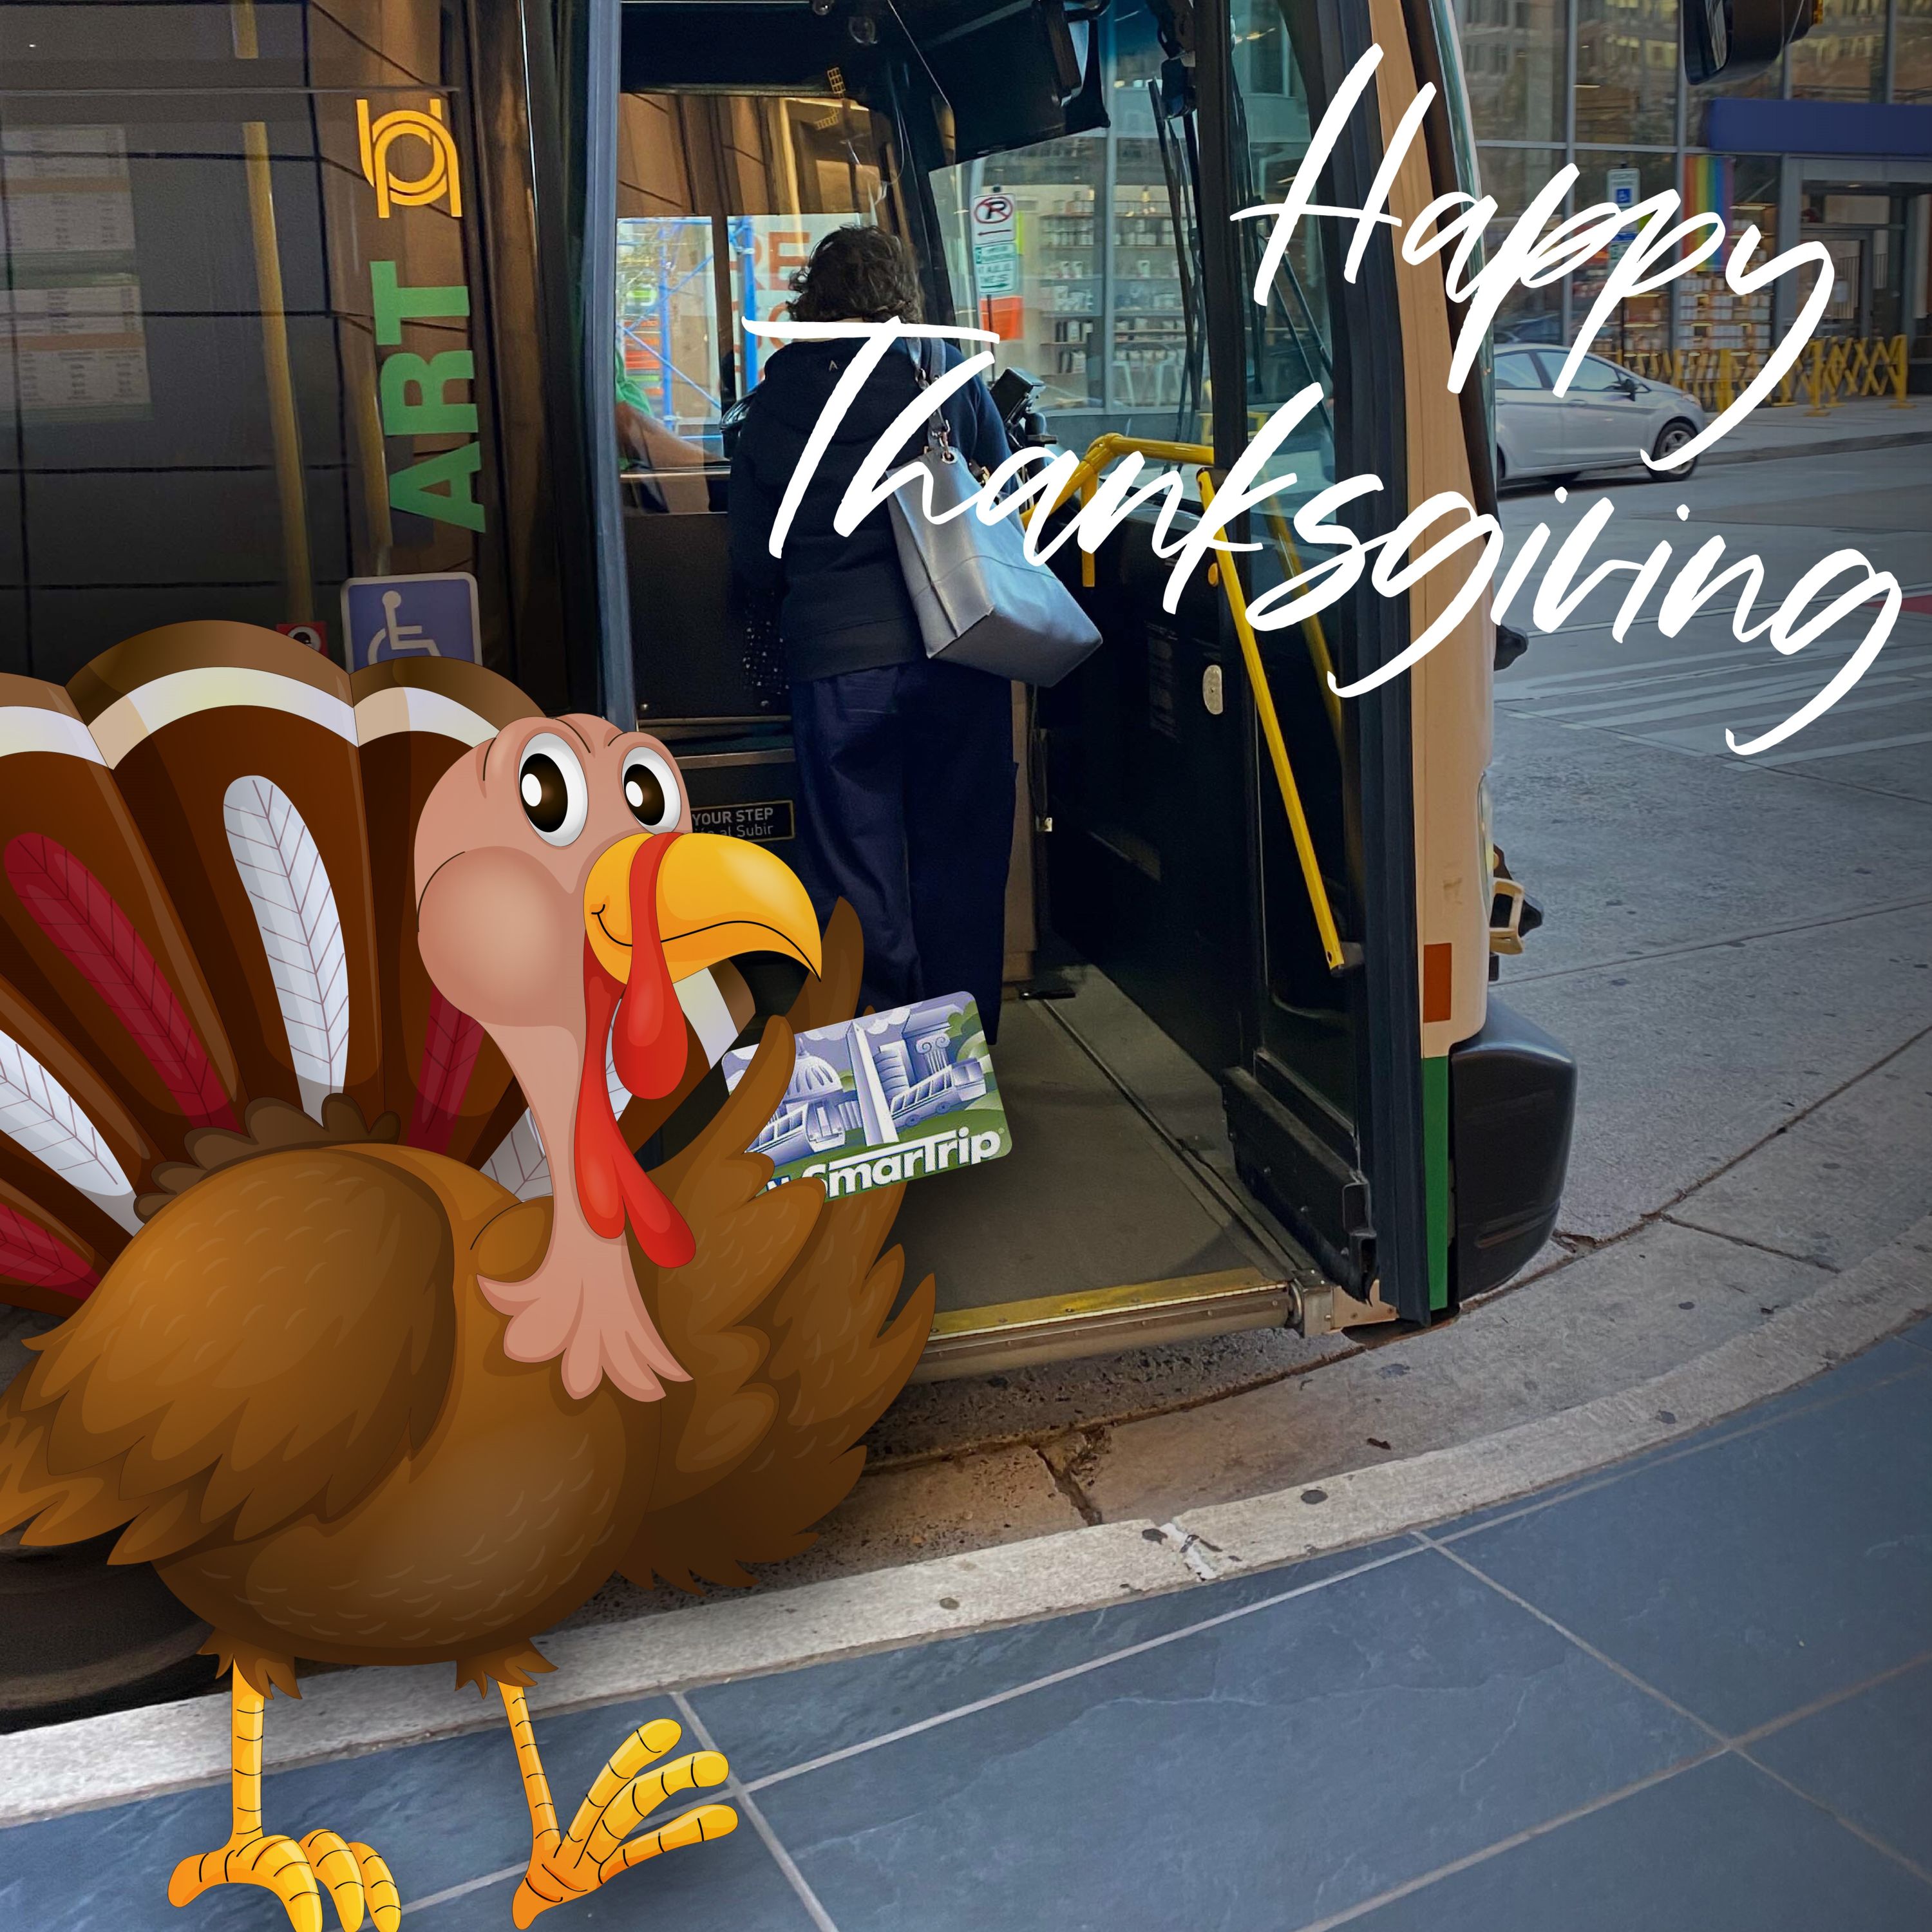 cartoon turkey boarding ART bus